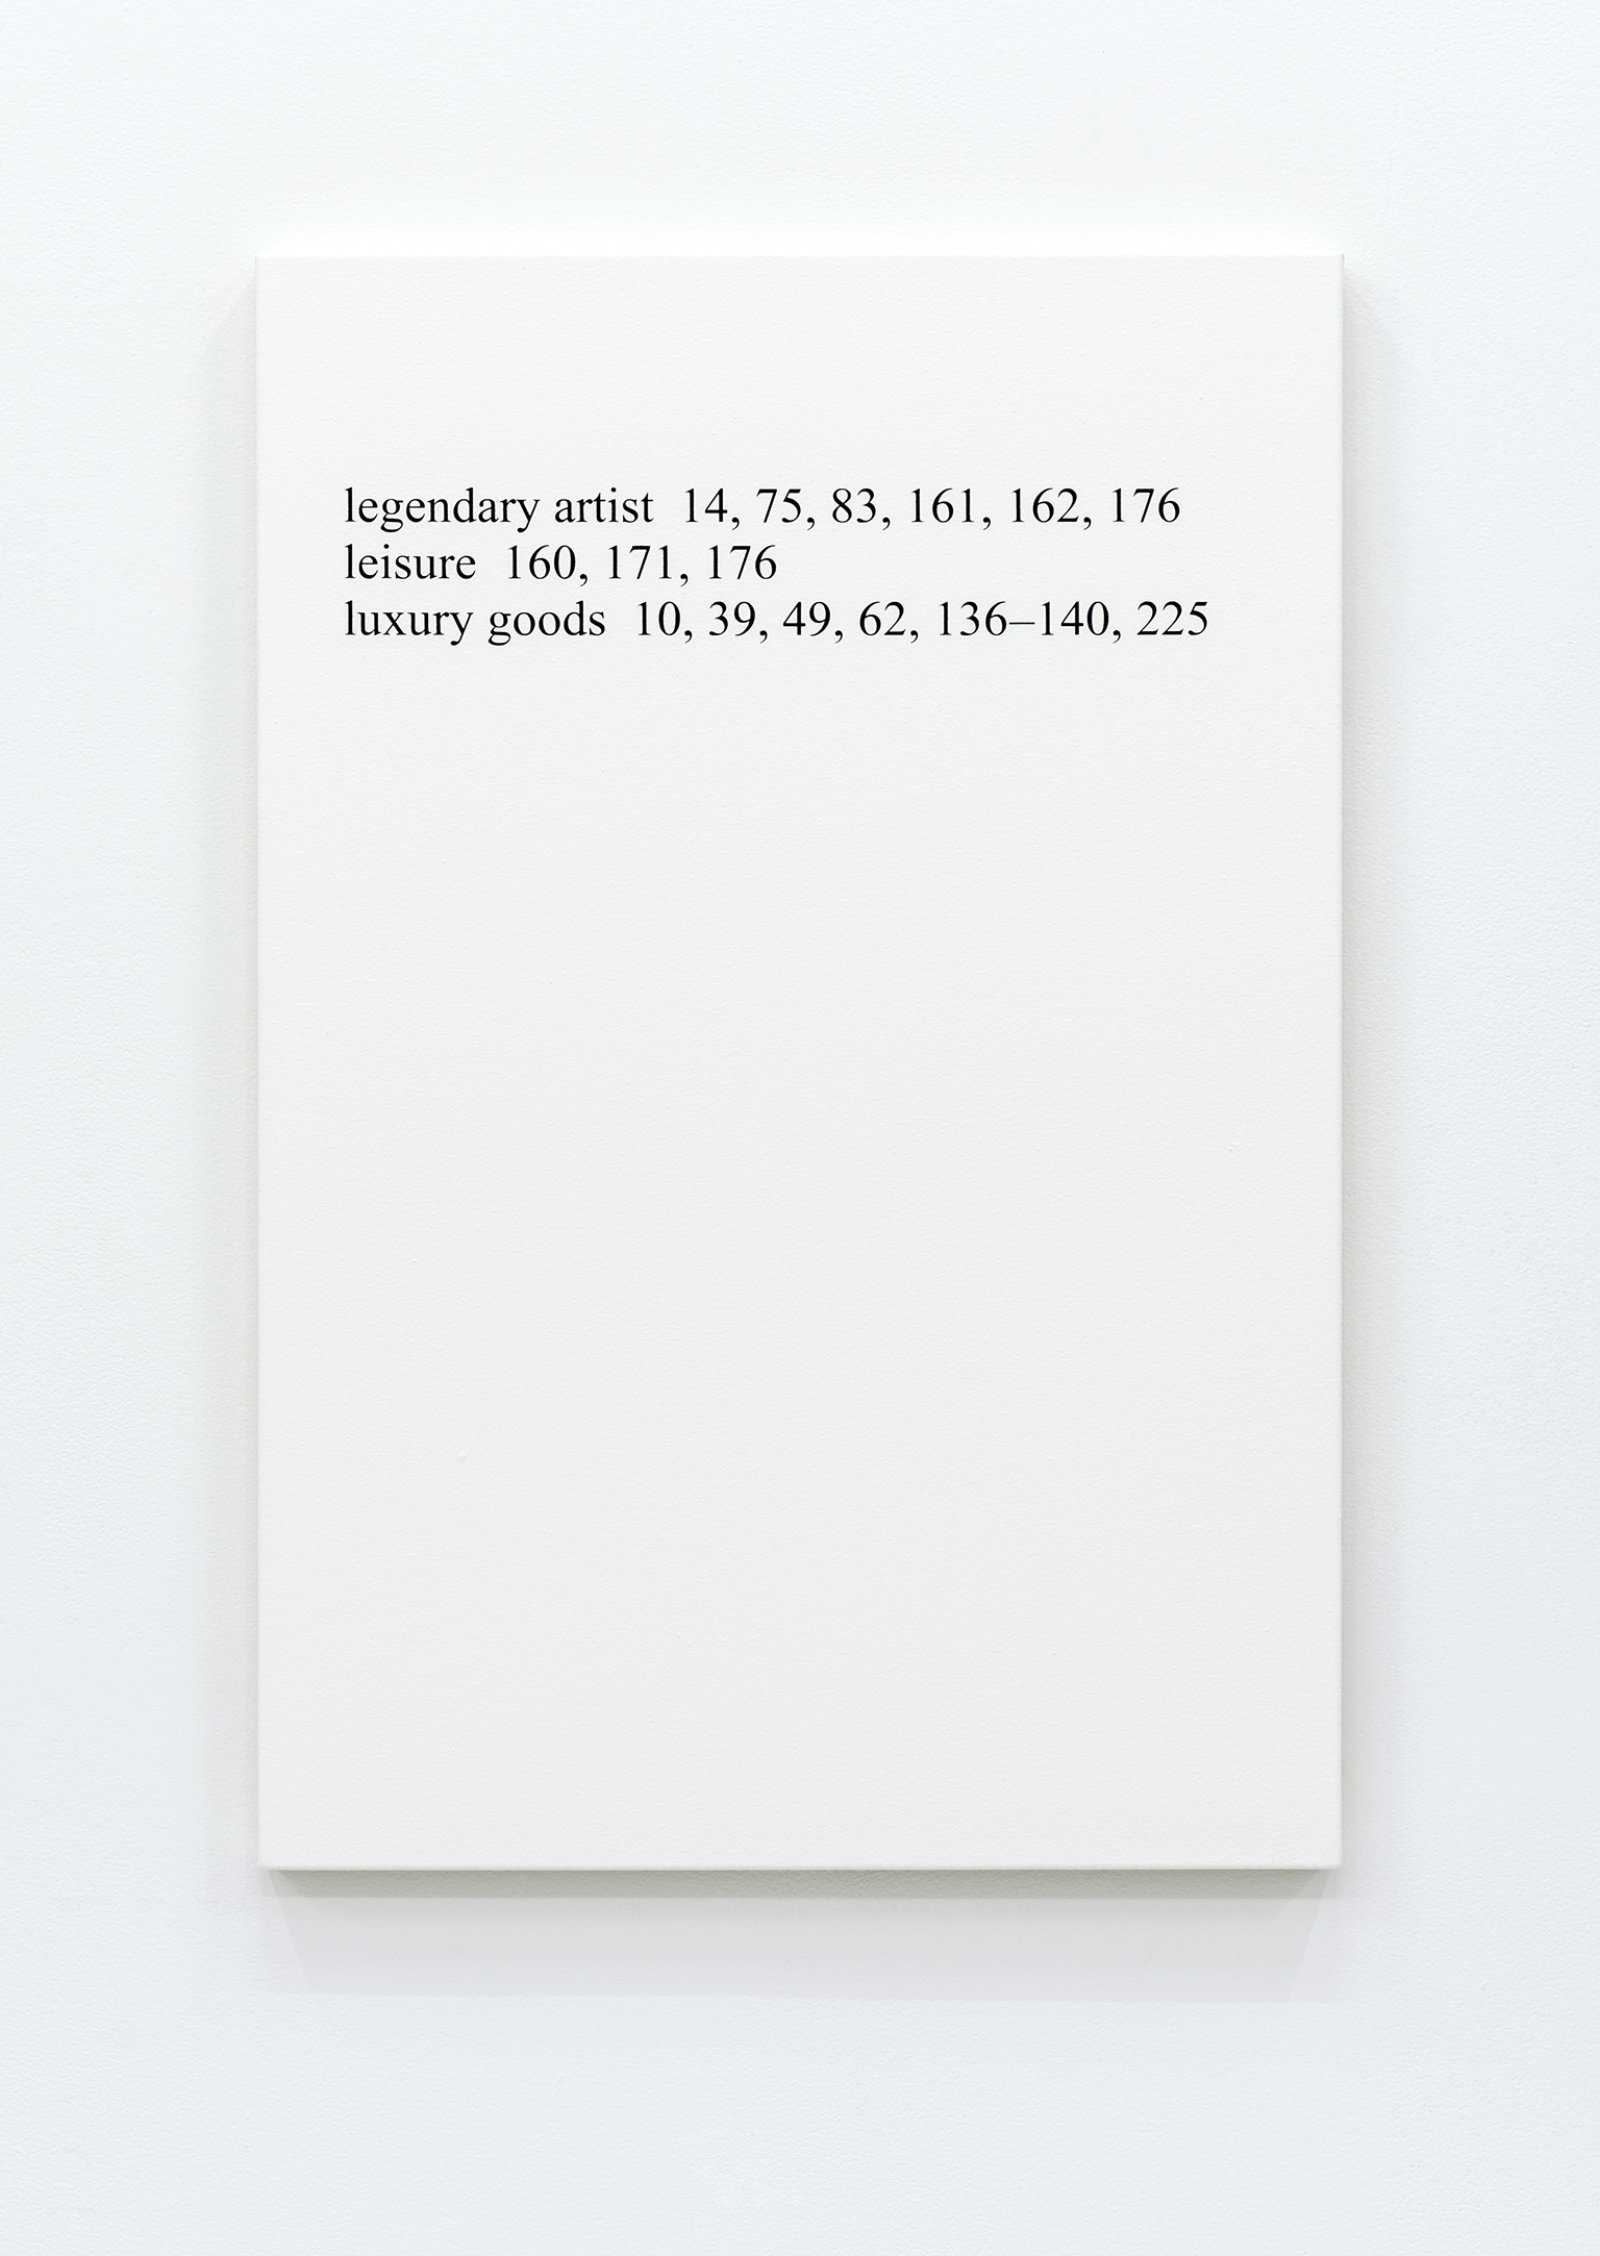 Ron Terada, High Price “L”, 2013, acrylic on canvas, 36 x 24 in. (91 x 61 cm)